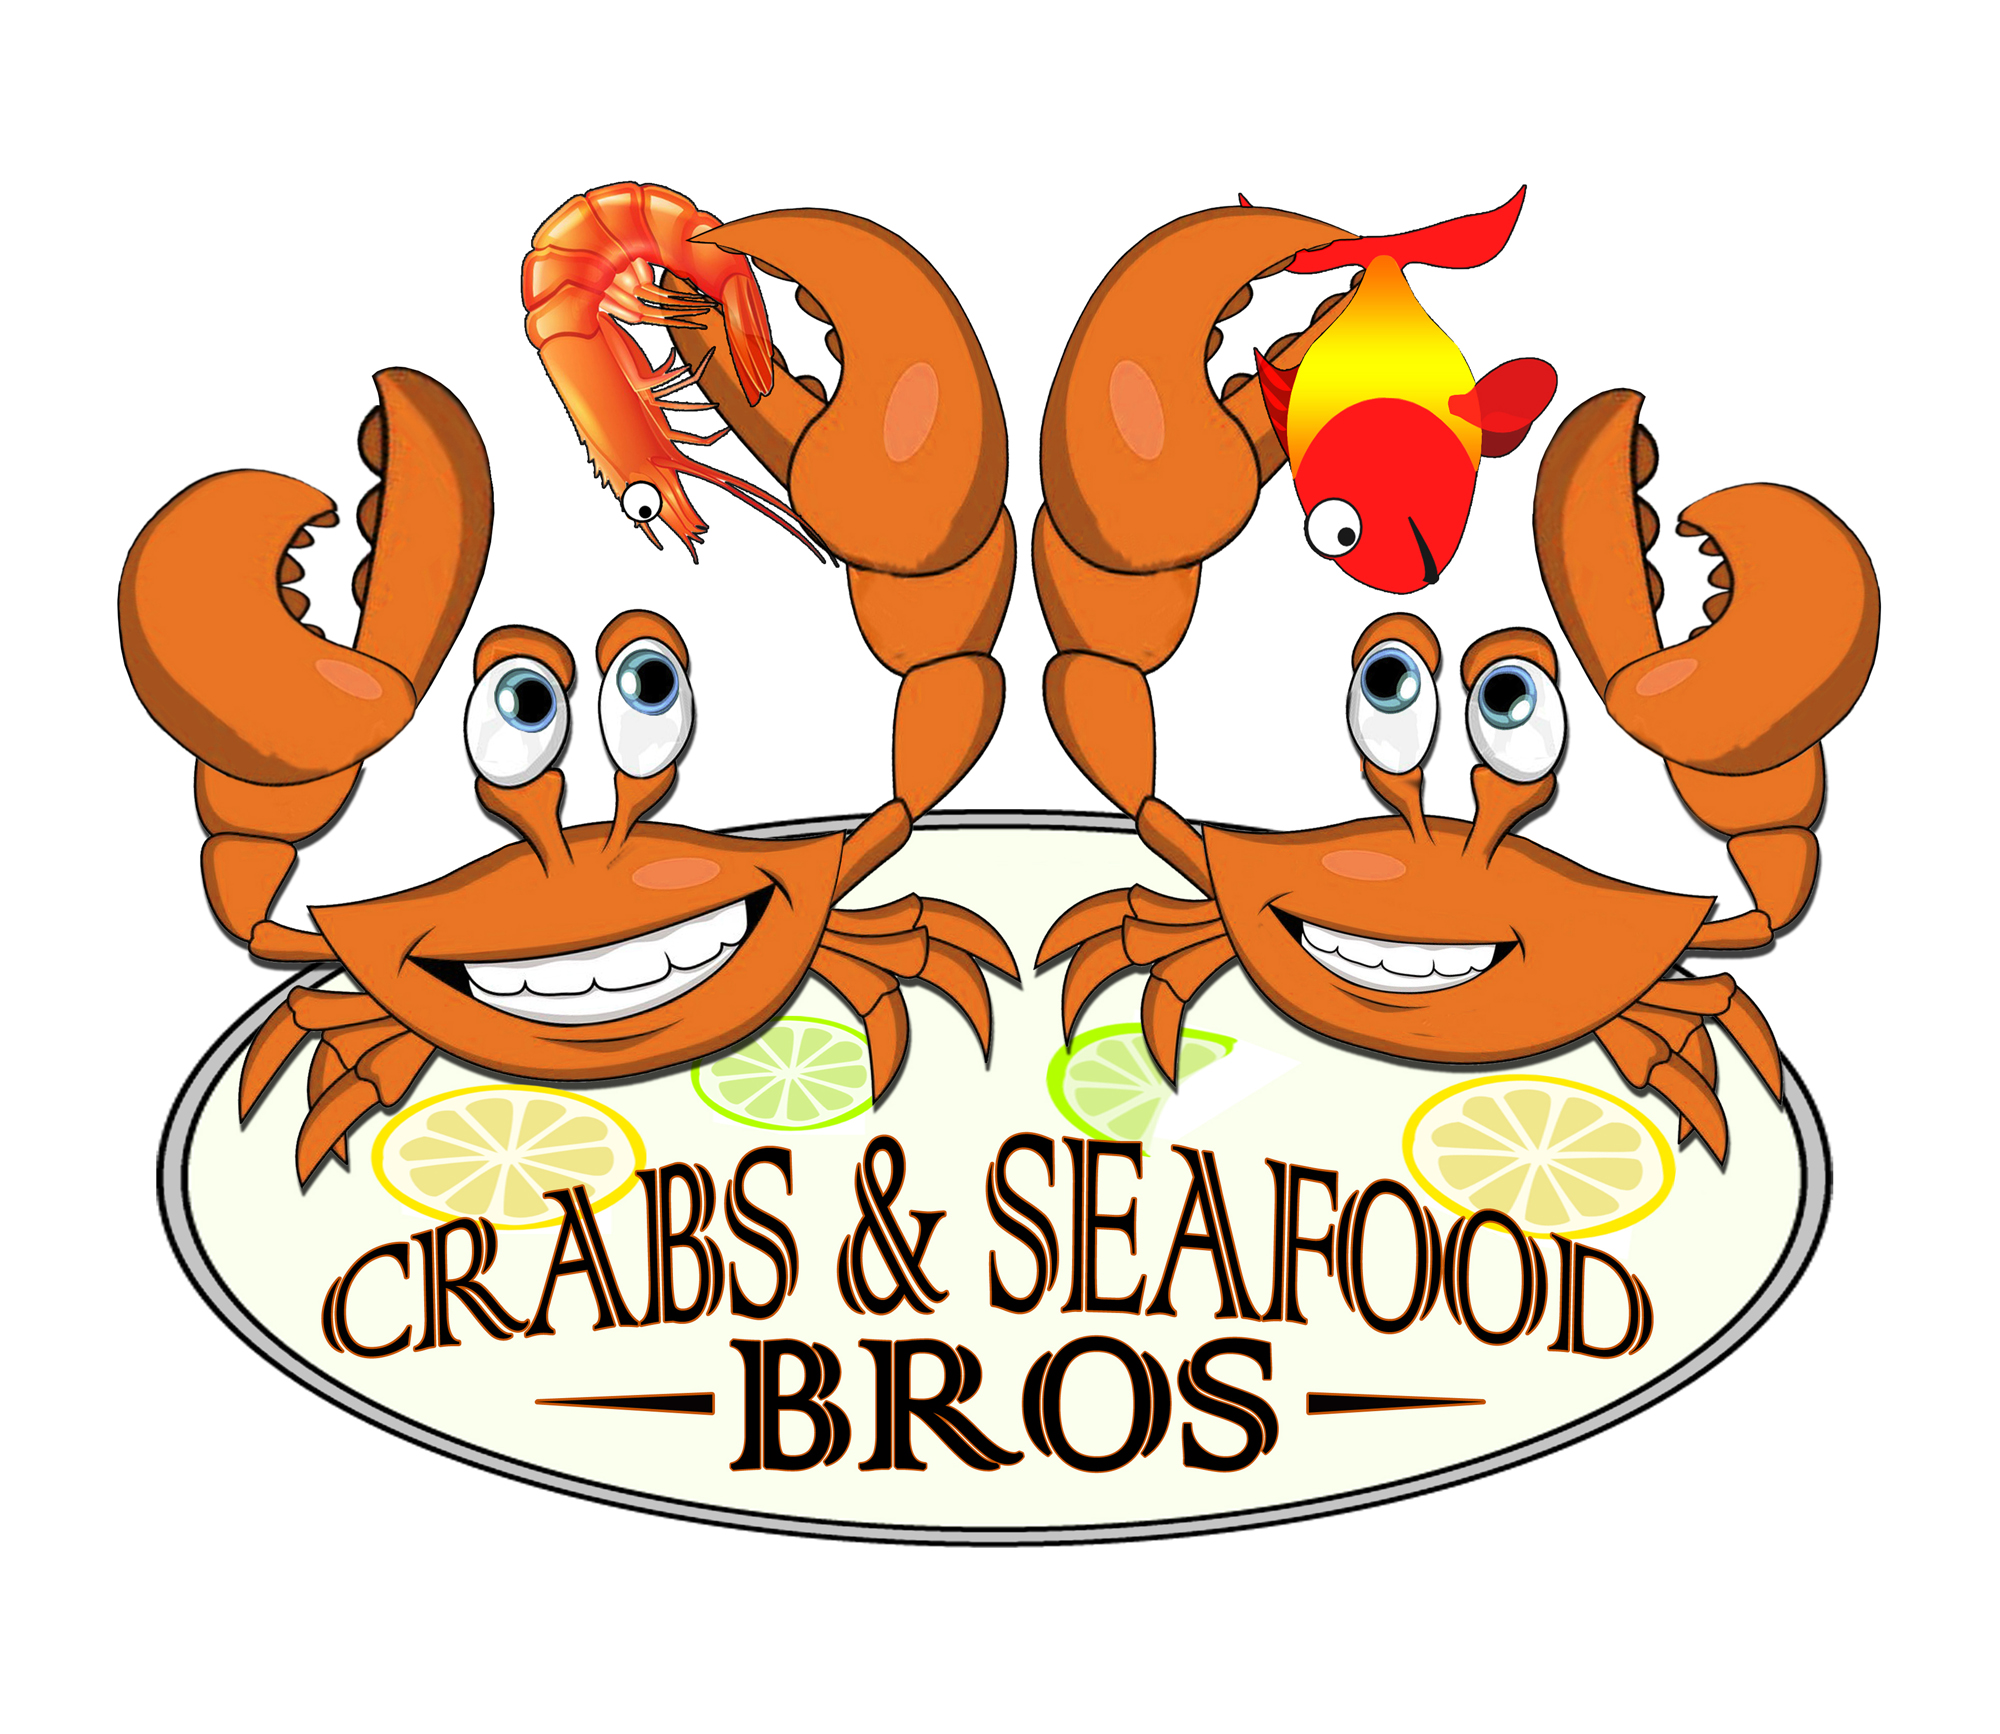 Crabs & Seafood Bros Logo